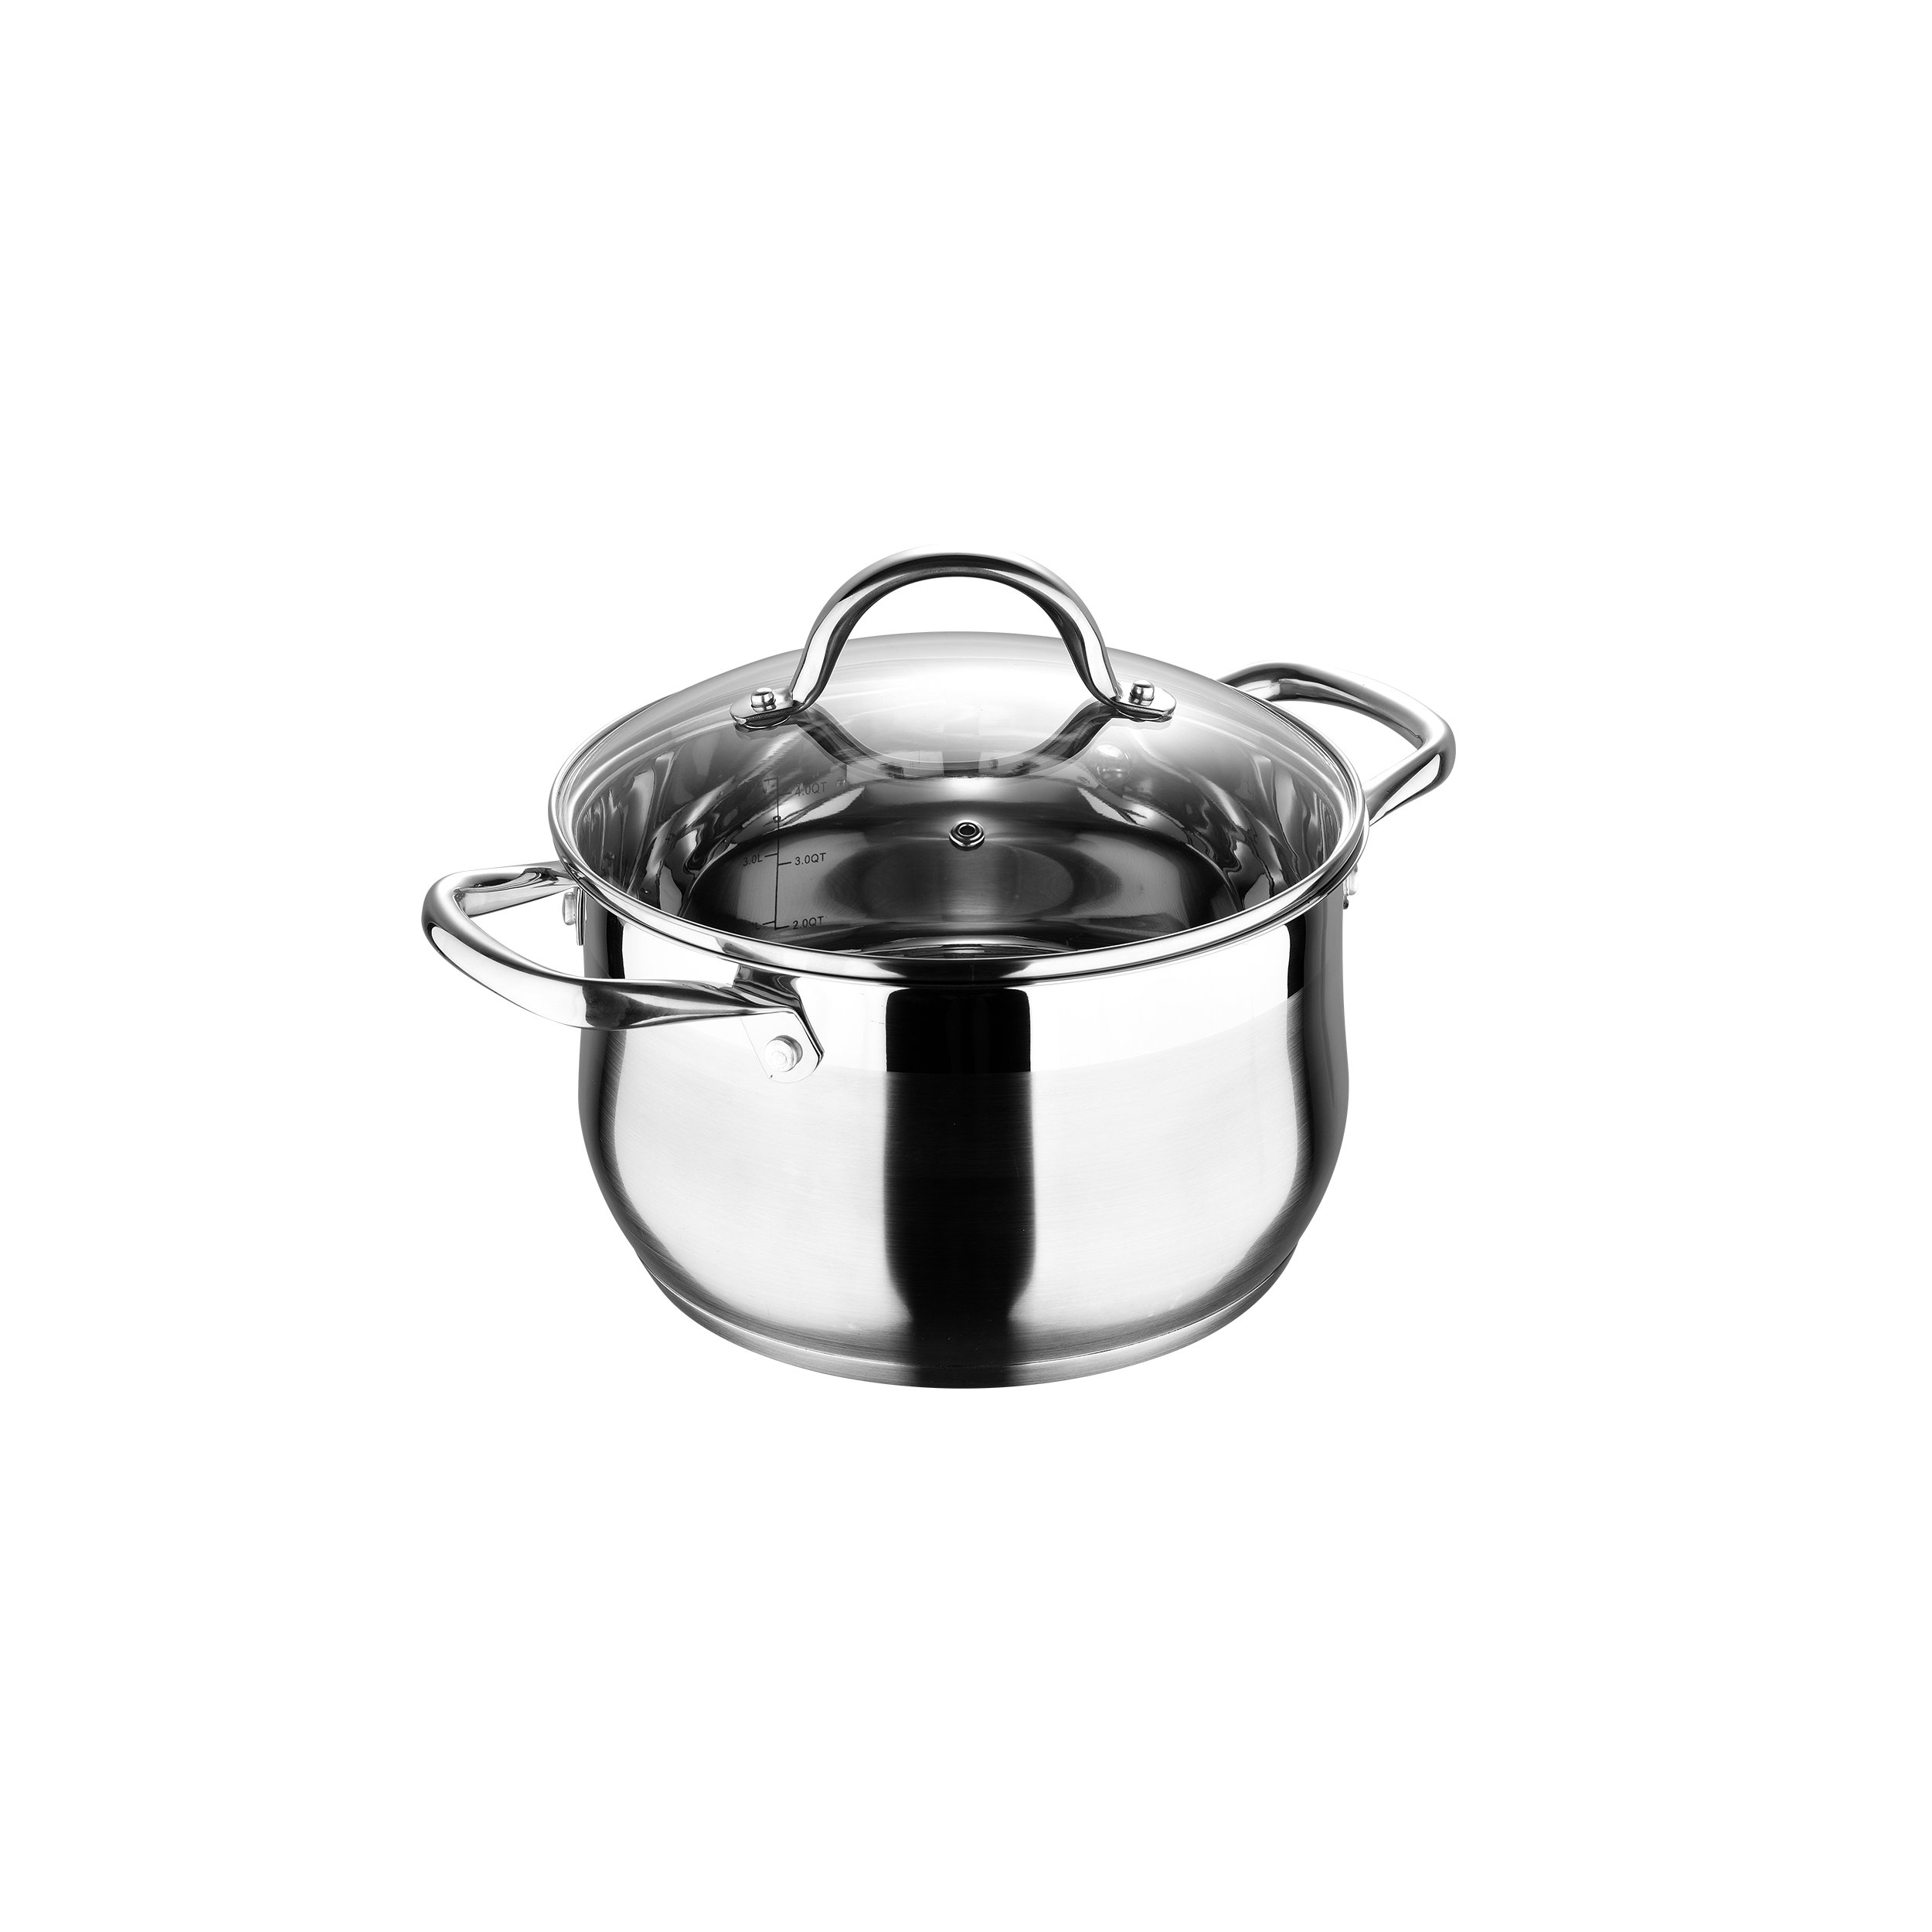 Aluminum Dutch Oven Pot Cookware 5 Quart Cooking Stewing Braising with  glass lid